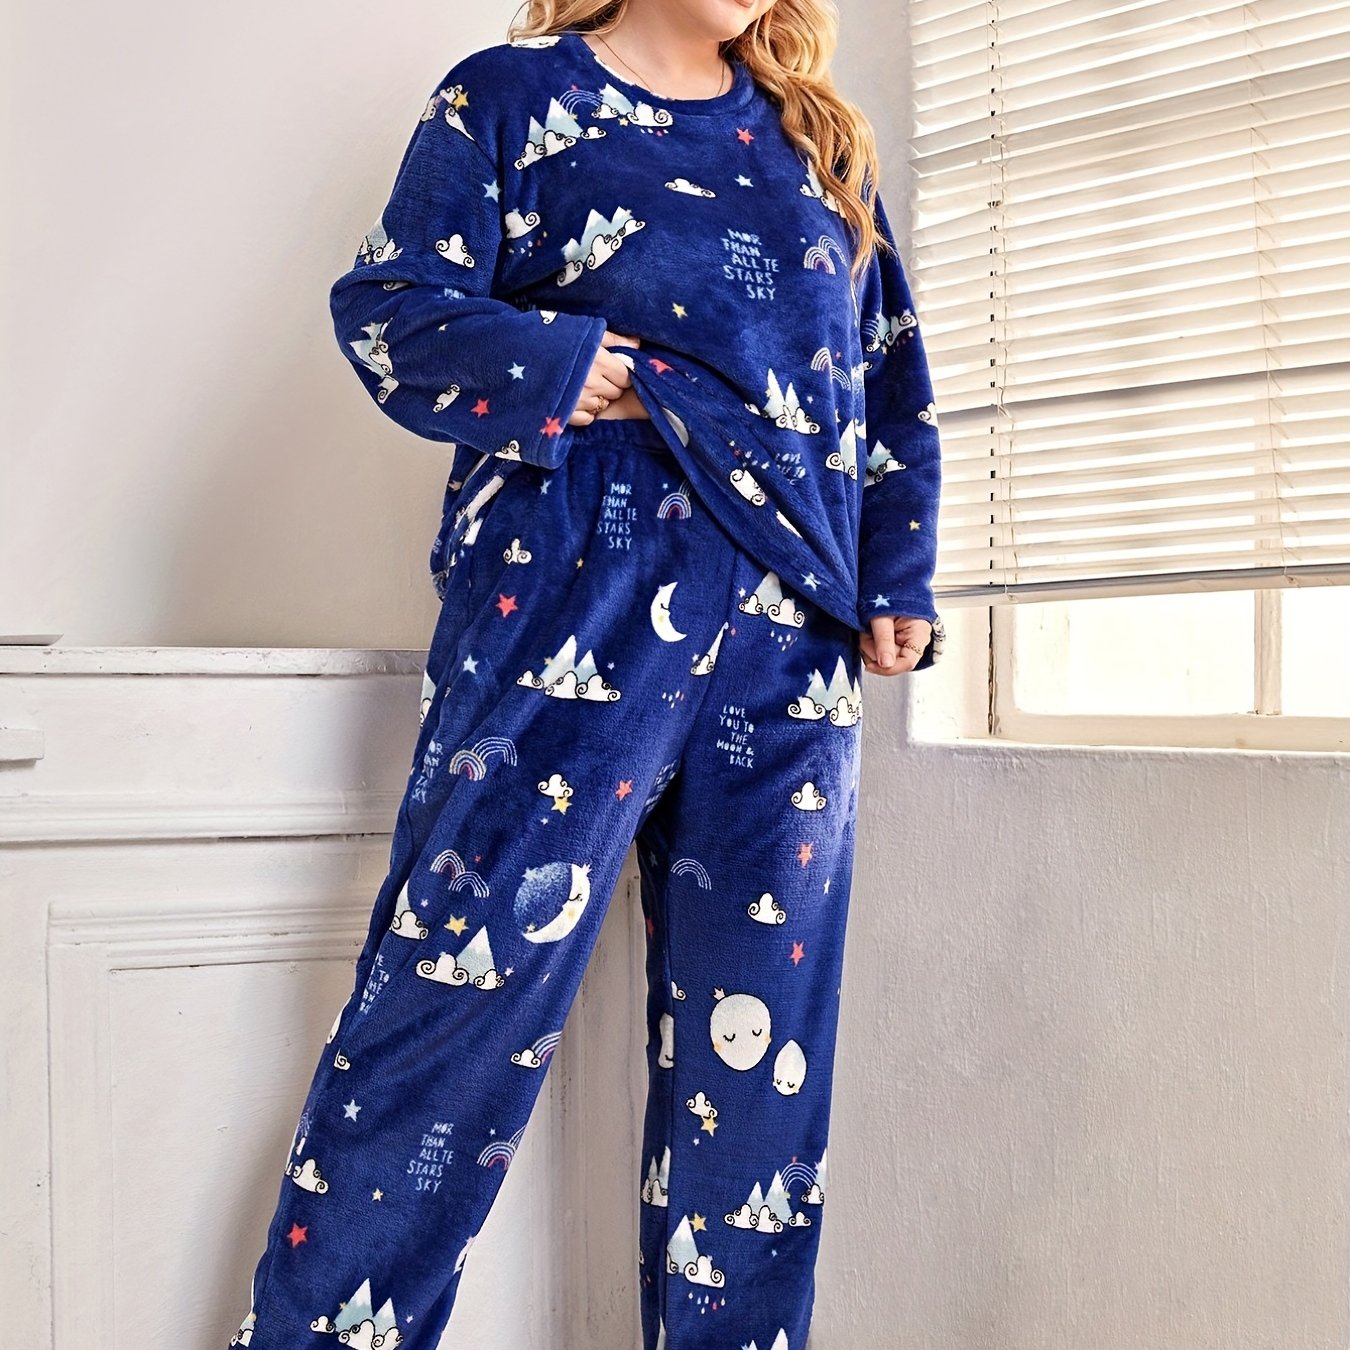 Chic Plus Size Pajama Set Blue